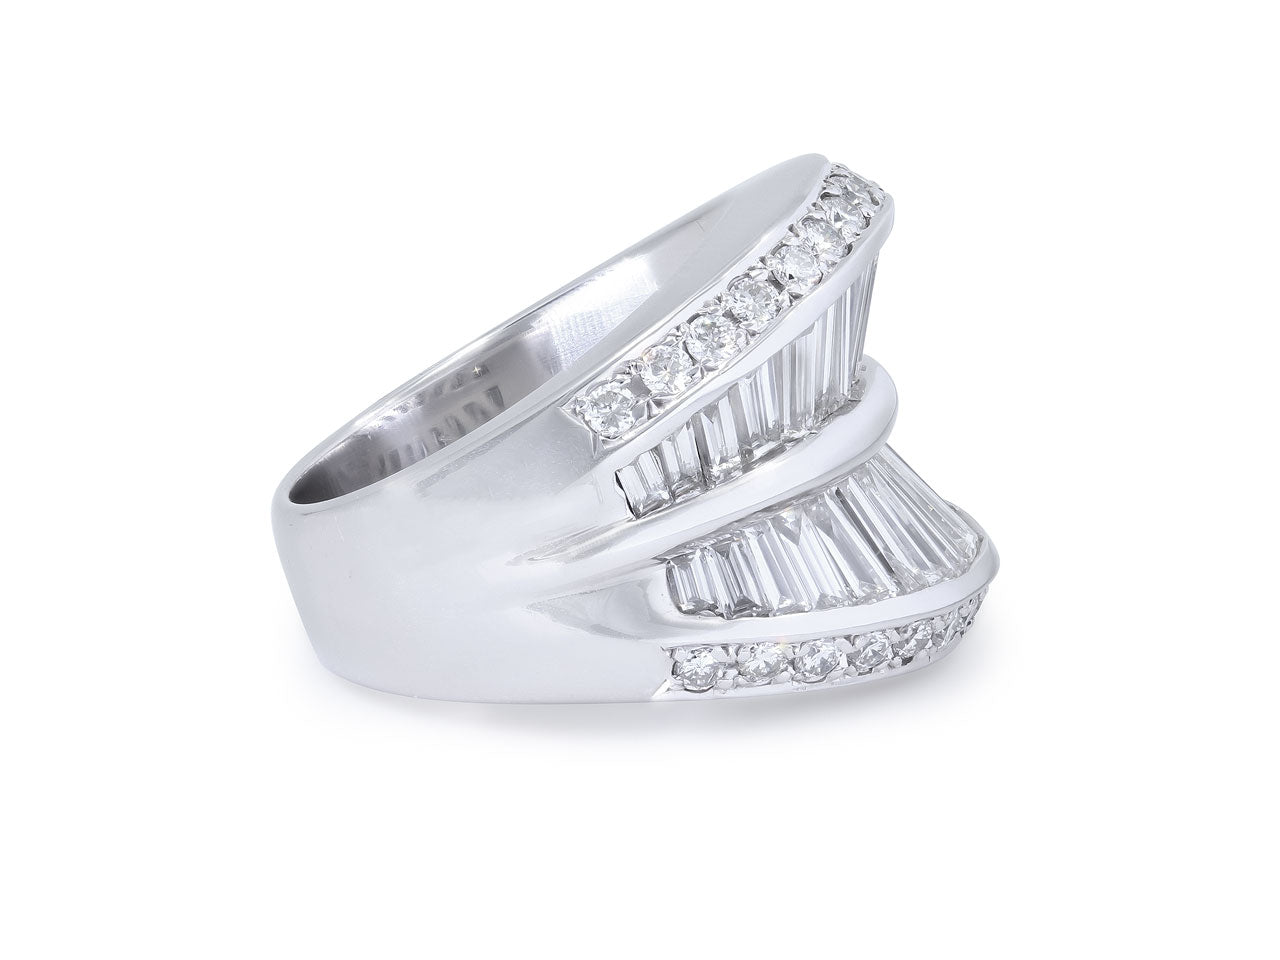 Diamond Cocktail Ring in 18K White Gold